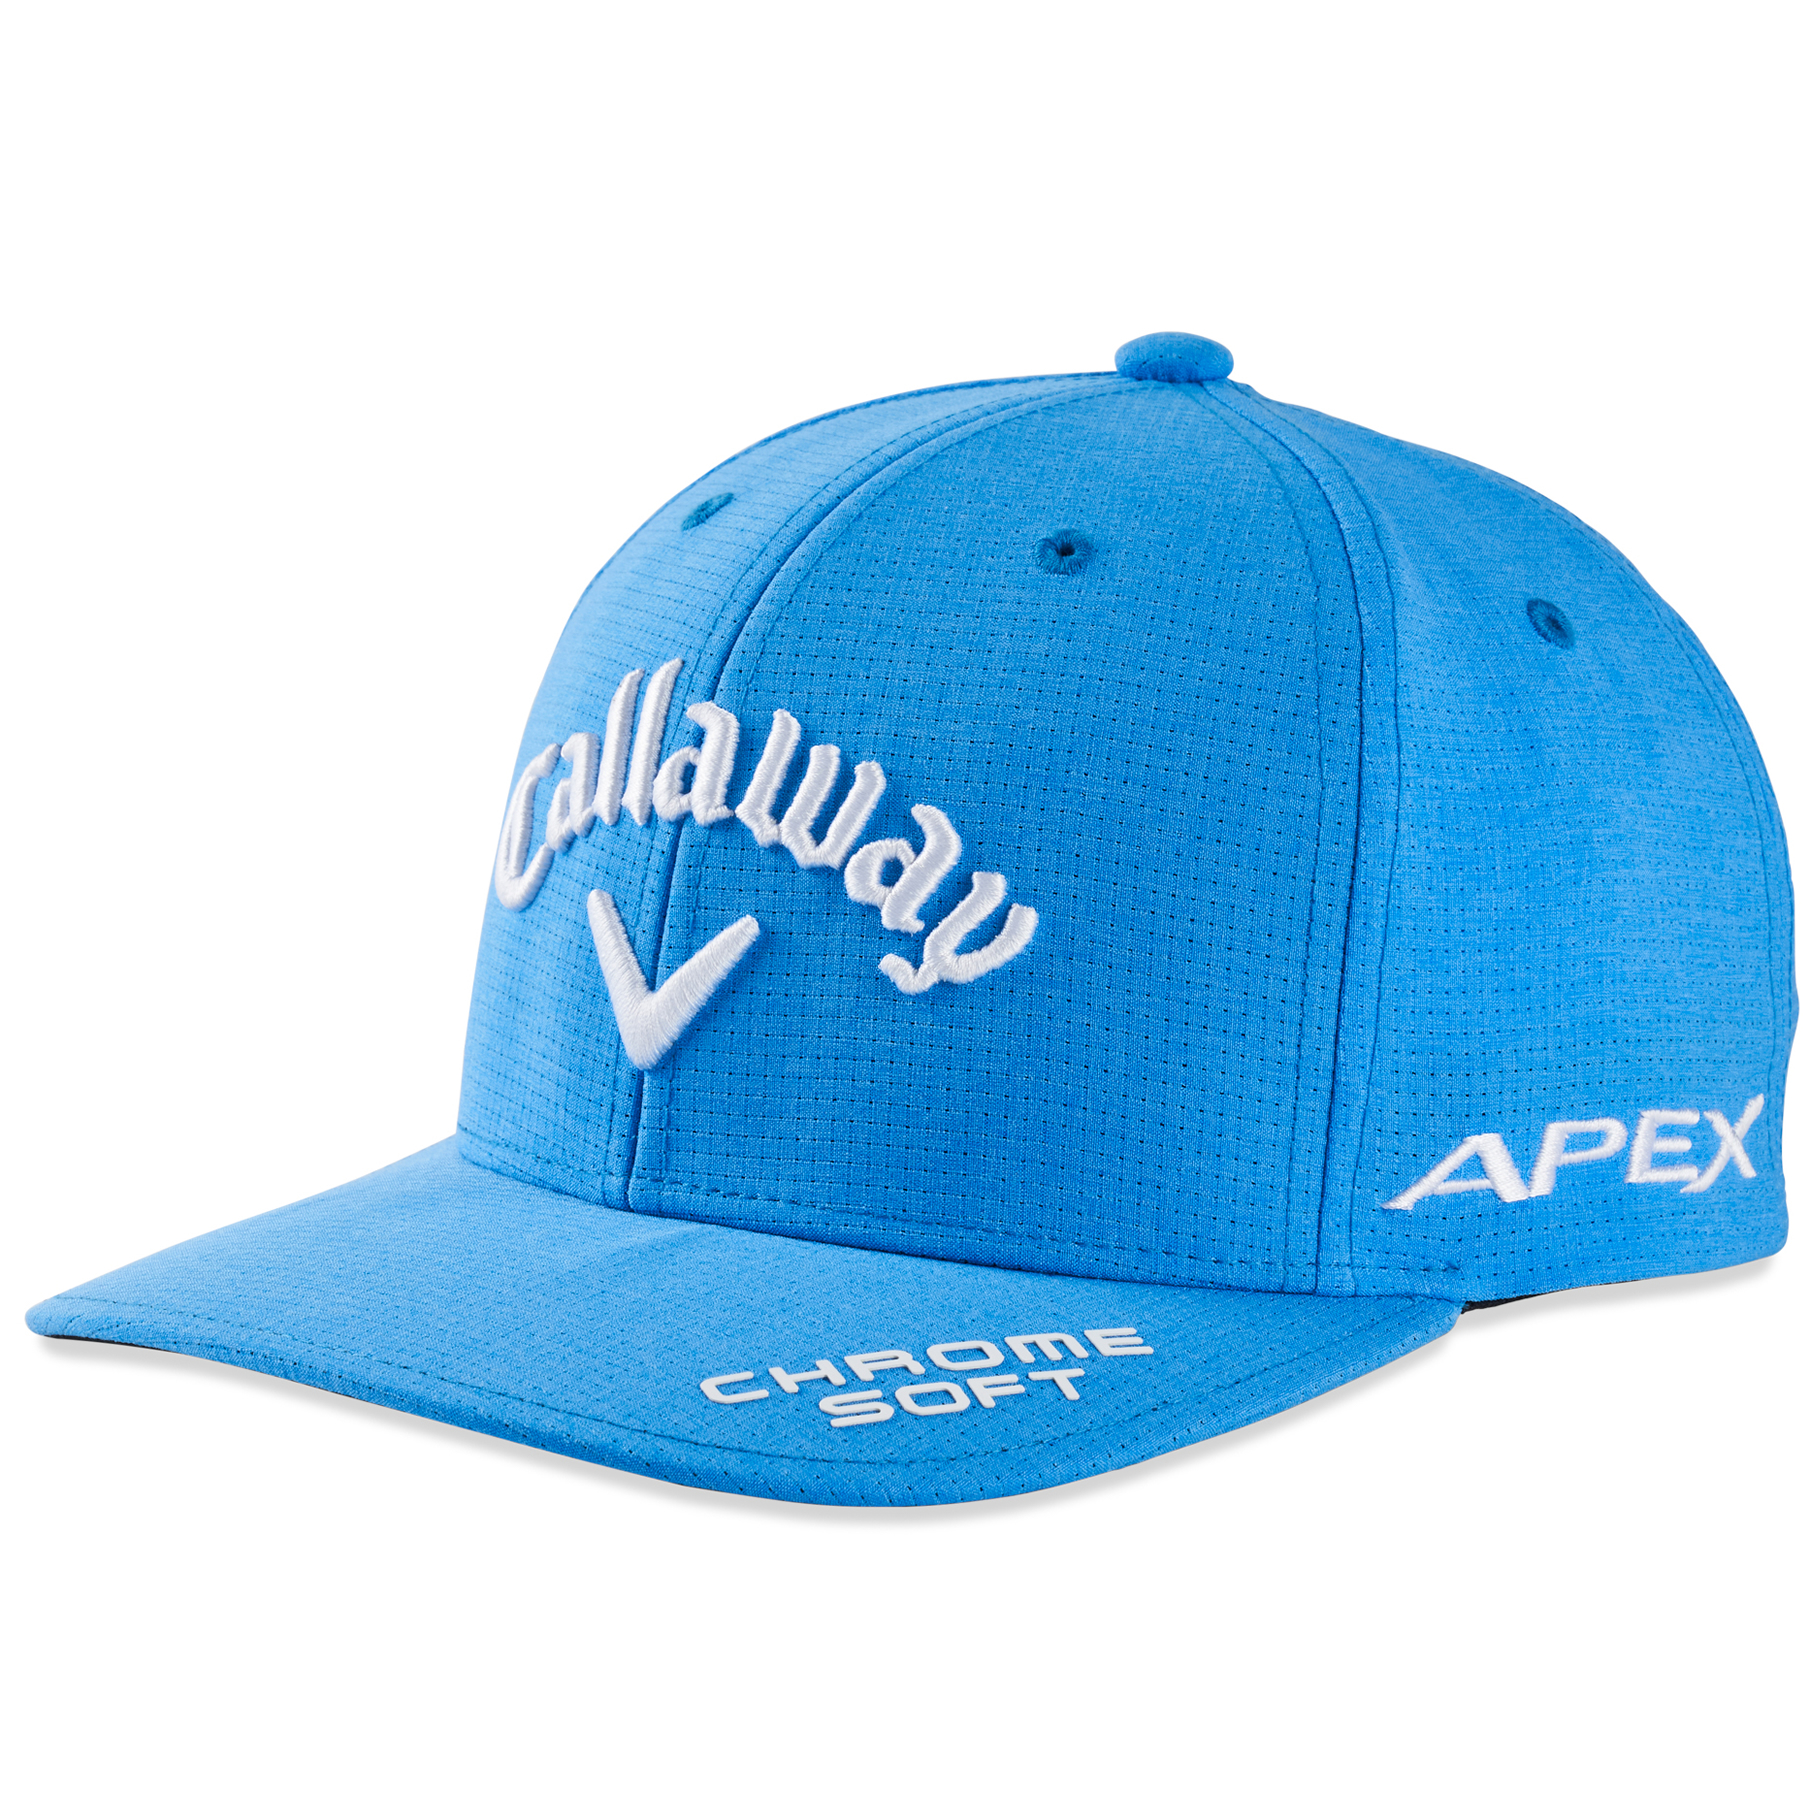 Callaway Tour Authentic Performance Pro Adjustable Baseball Cap